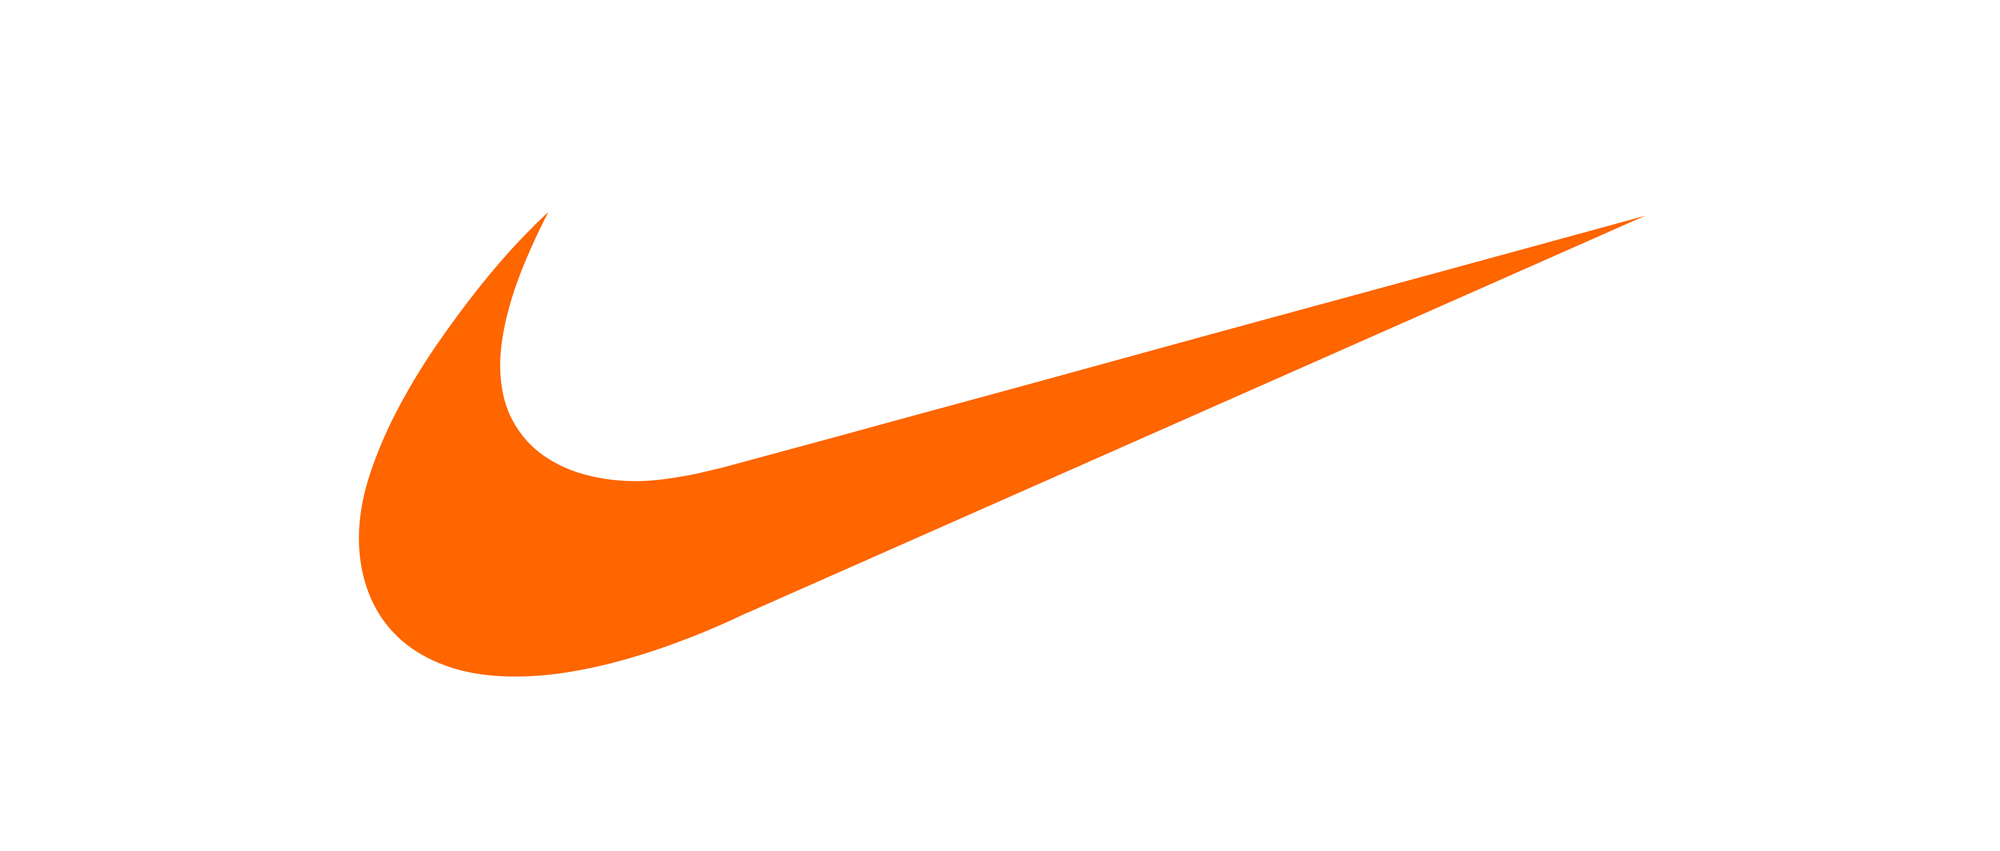 Planta de semillero Groseramente Buena suerte Nike logo : histoire, signification, évolution et symbole